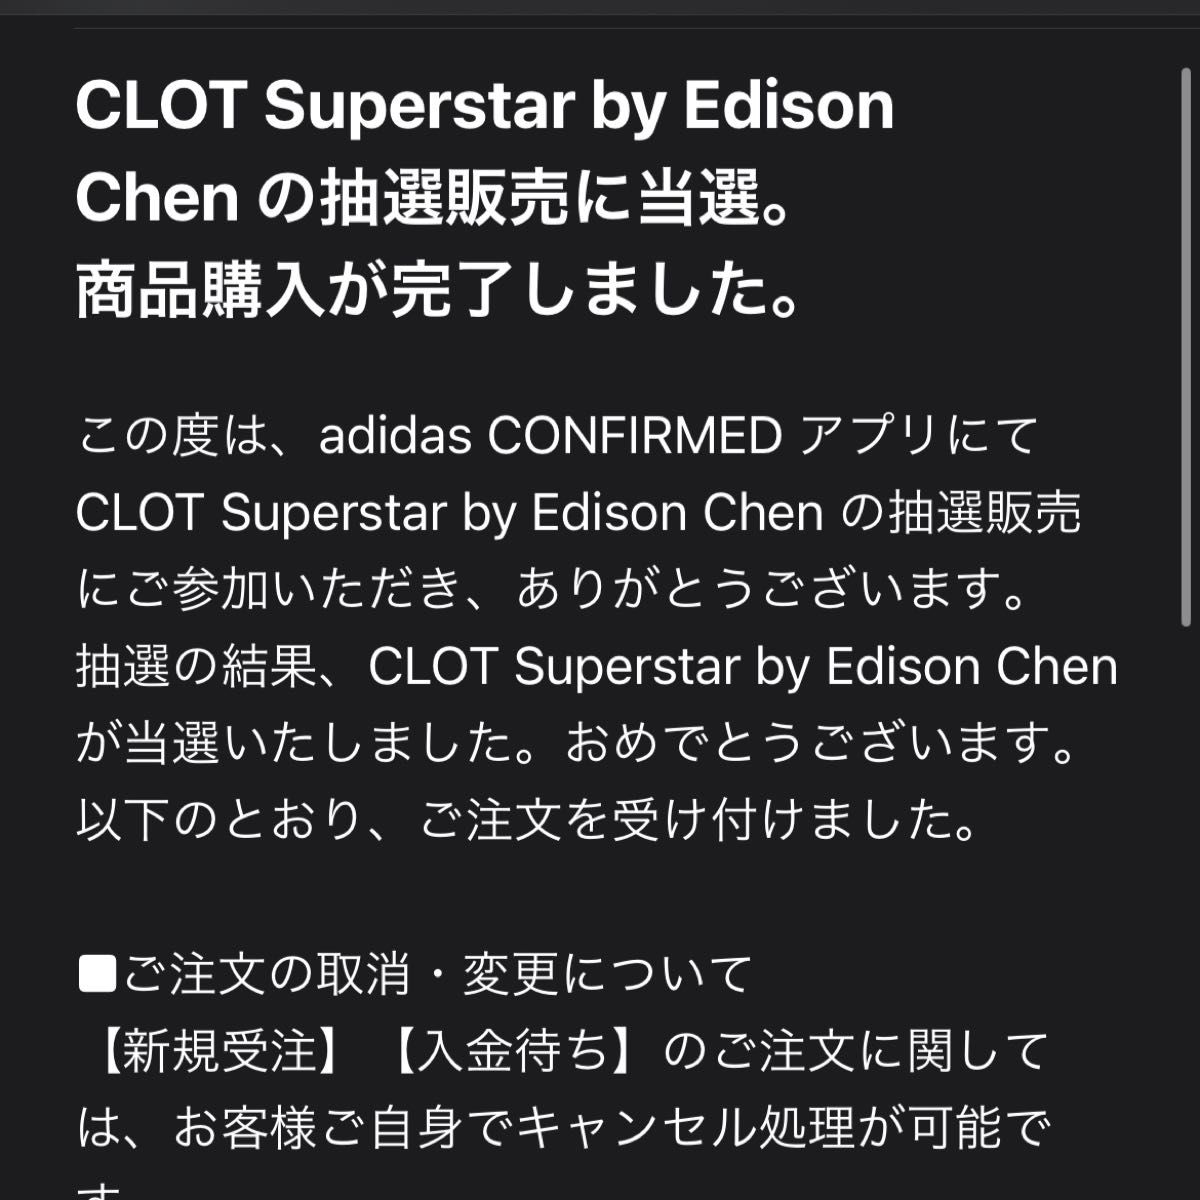 CLOT × adidas Originals Superstar Core Black/Footwear White 27cm